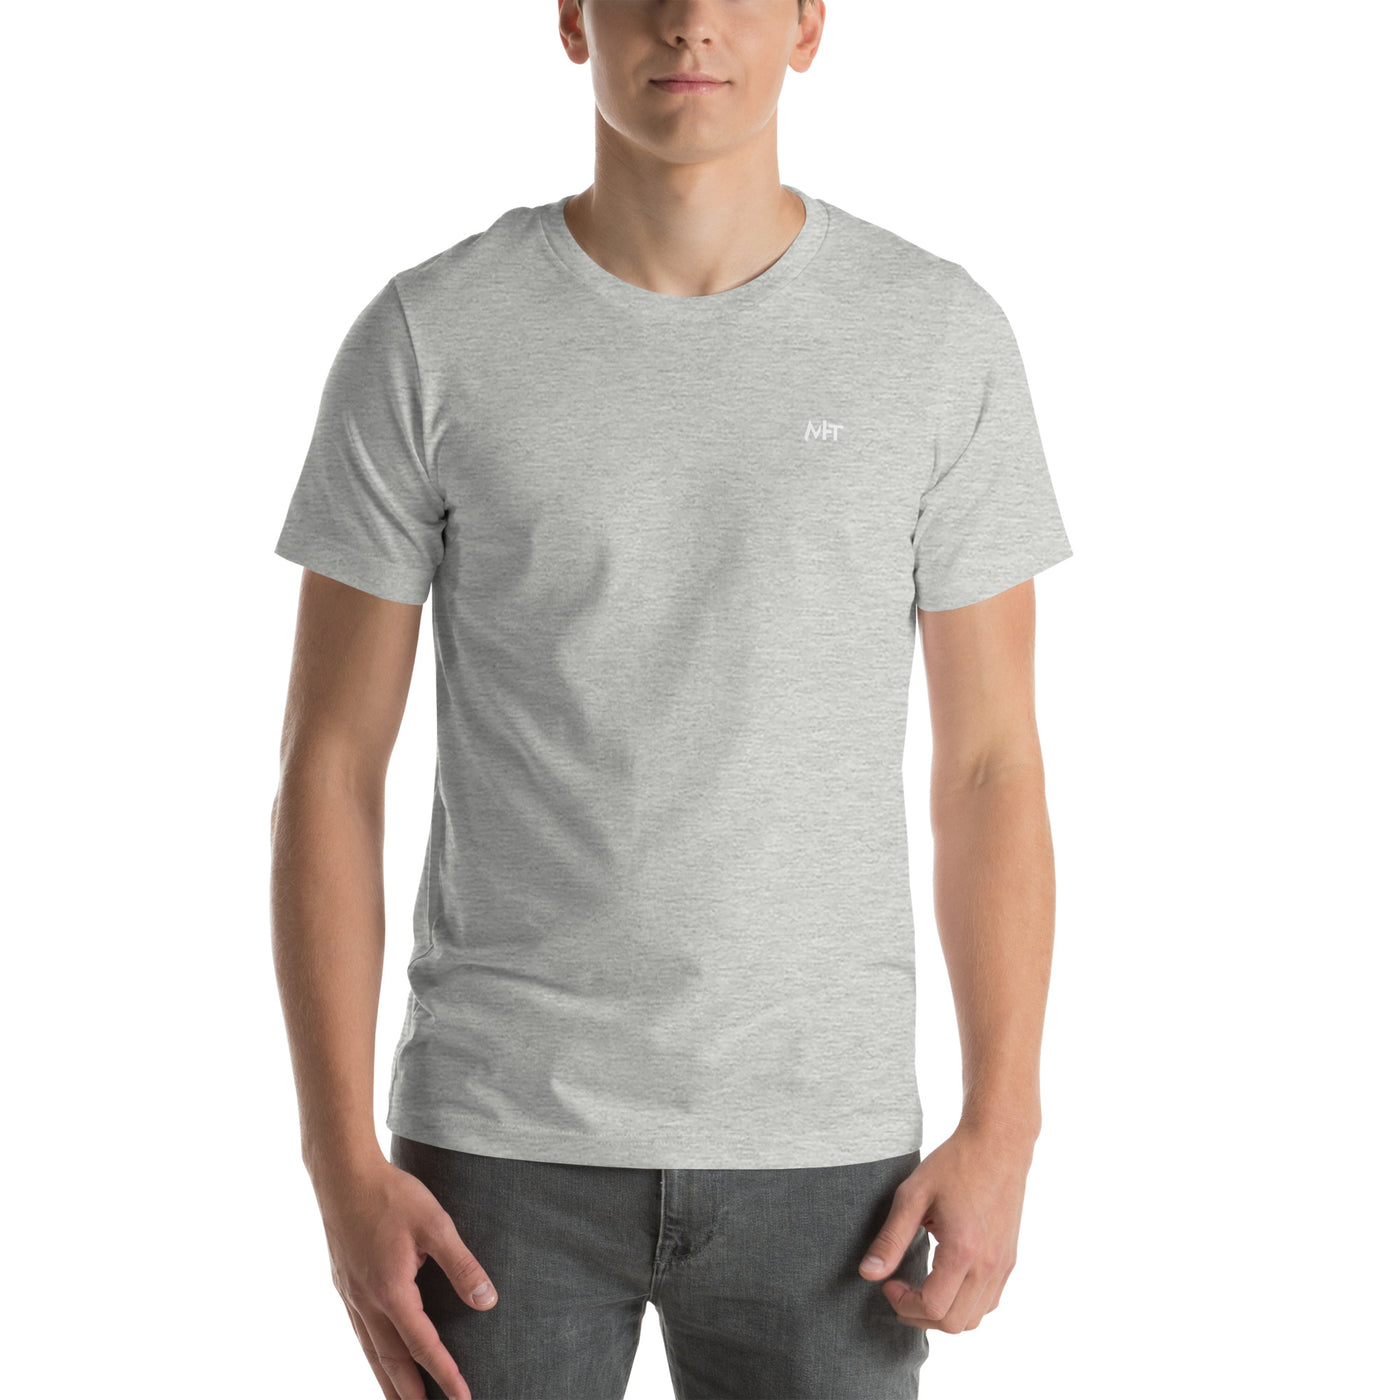 Master's Degree Level Complete - Unisex t-shirt ( Back Print )